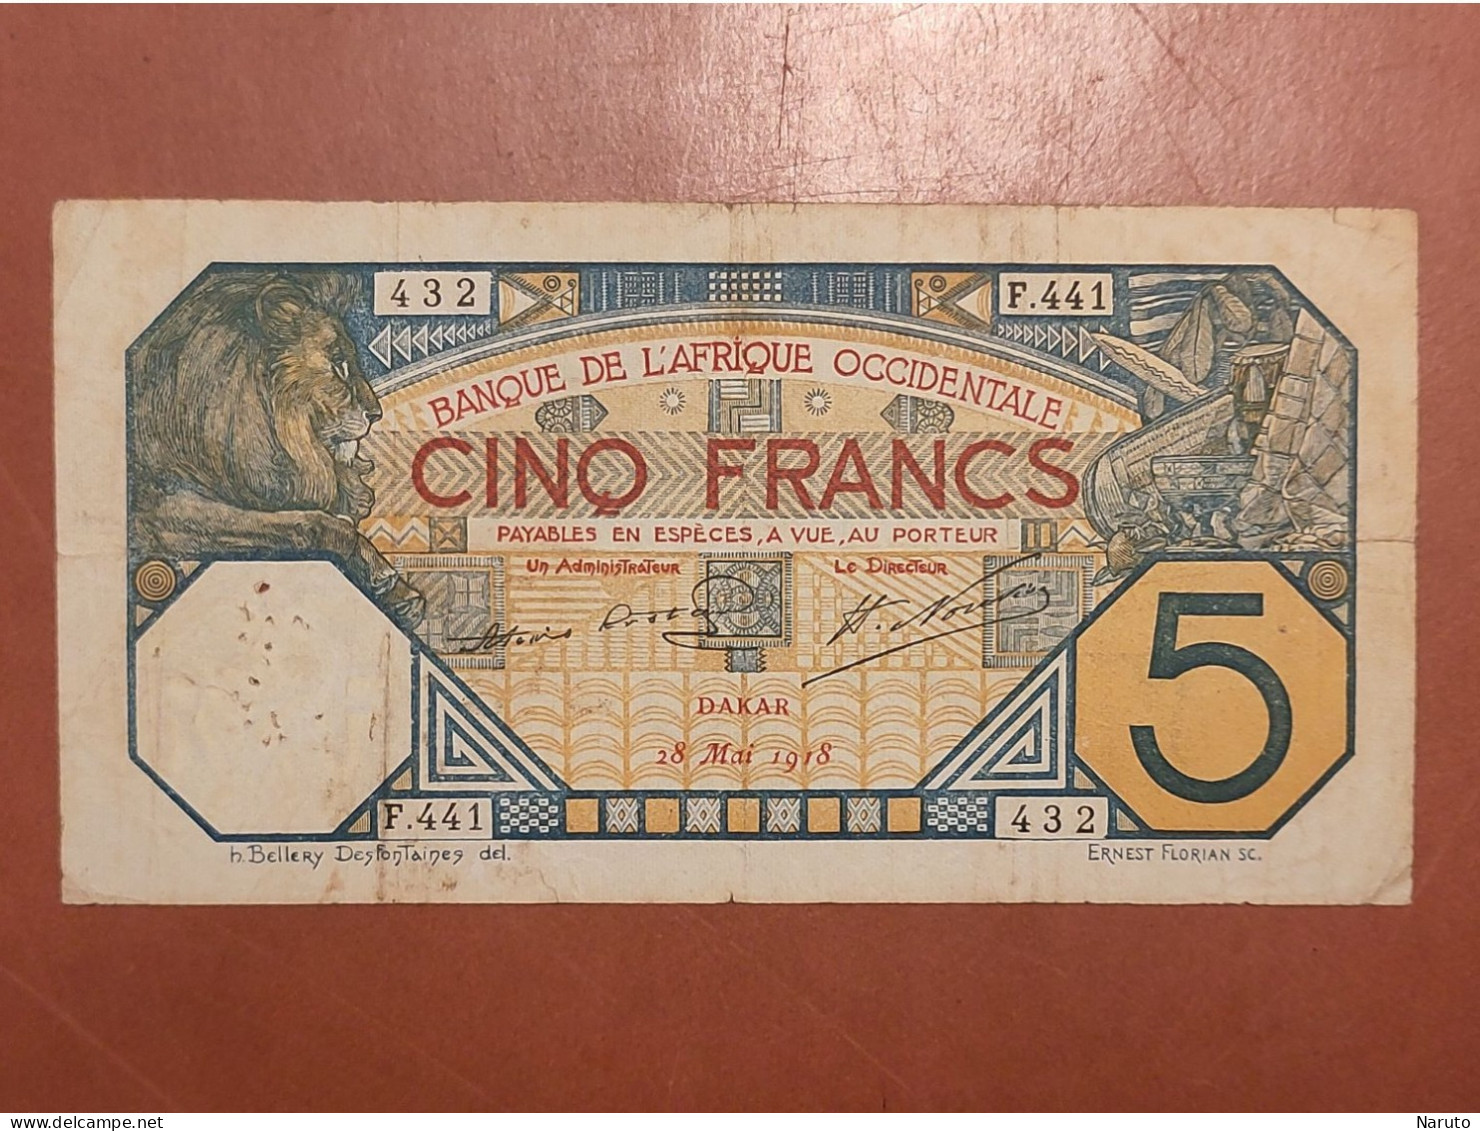 Billet De 5 Francs De La Banque De L'Afrique Occidentale, Dakar, 28 Mai 1918 - Kiloware - Banknoten